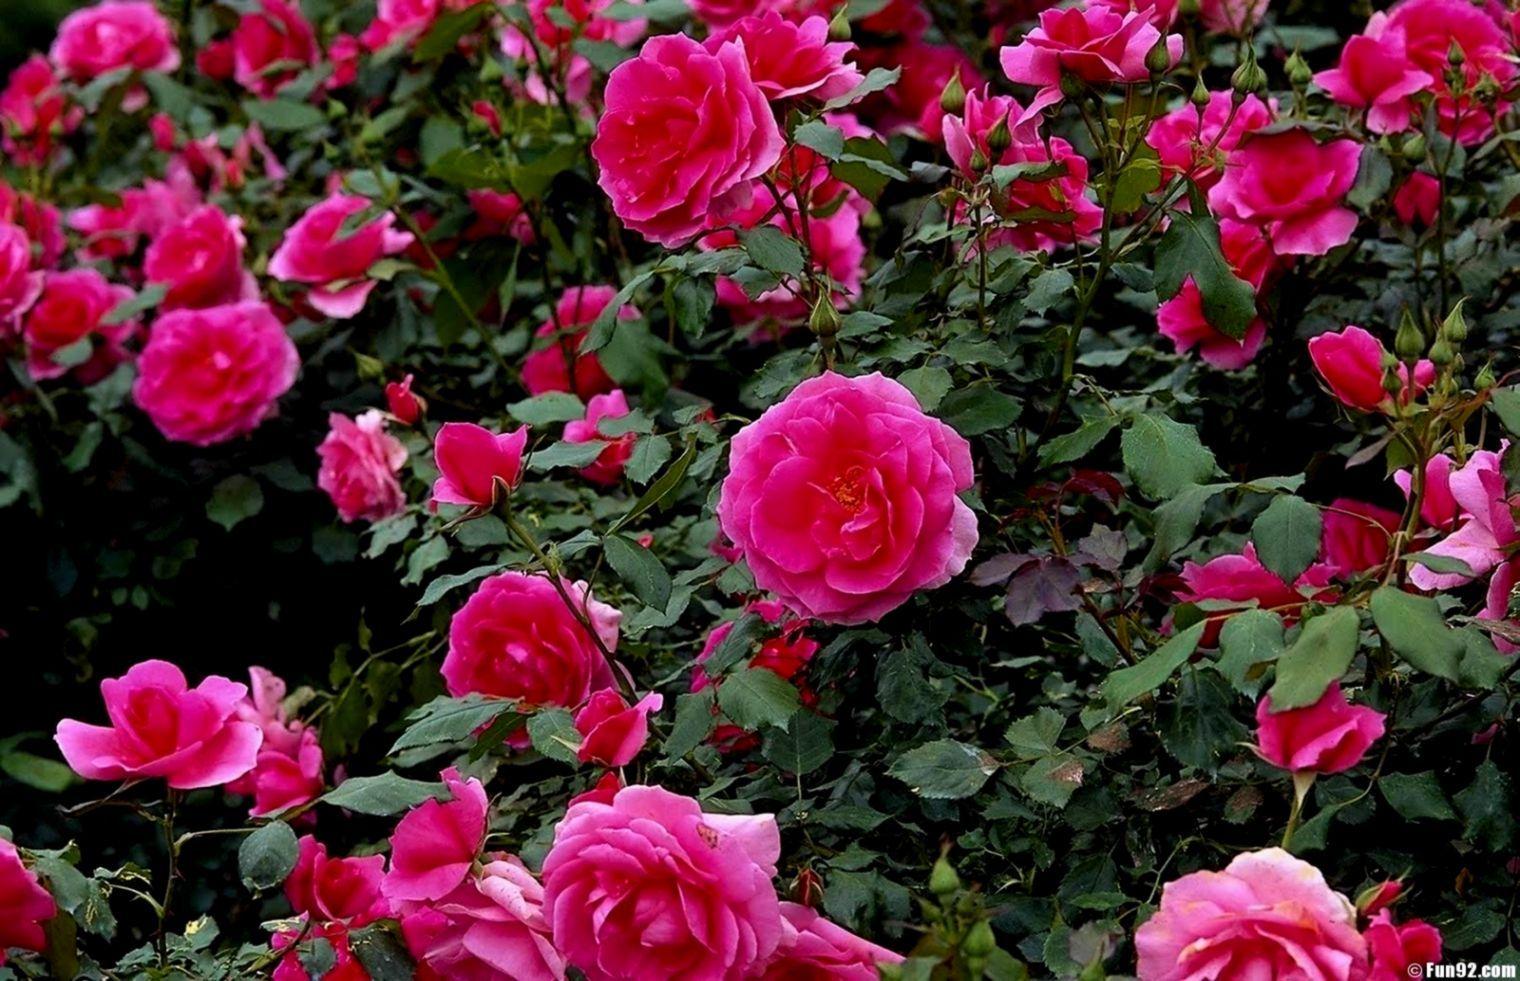 Garden Rose Flower Wallpapers - Top Free Garden Rose Flower Backgrounds